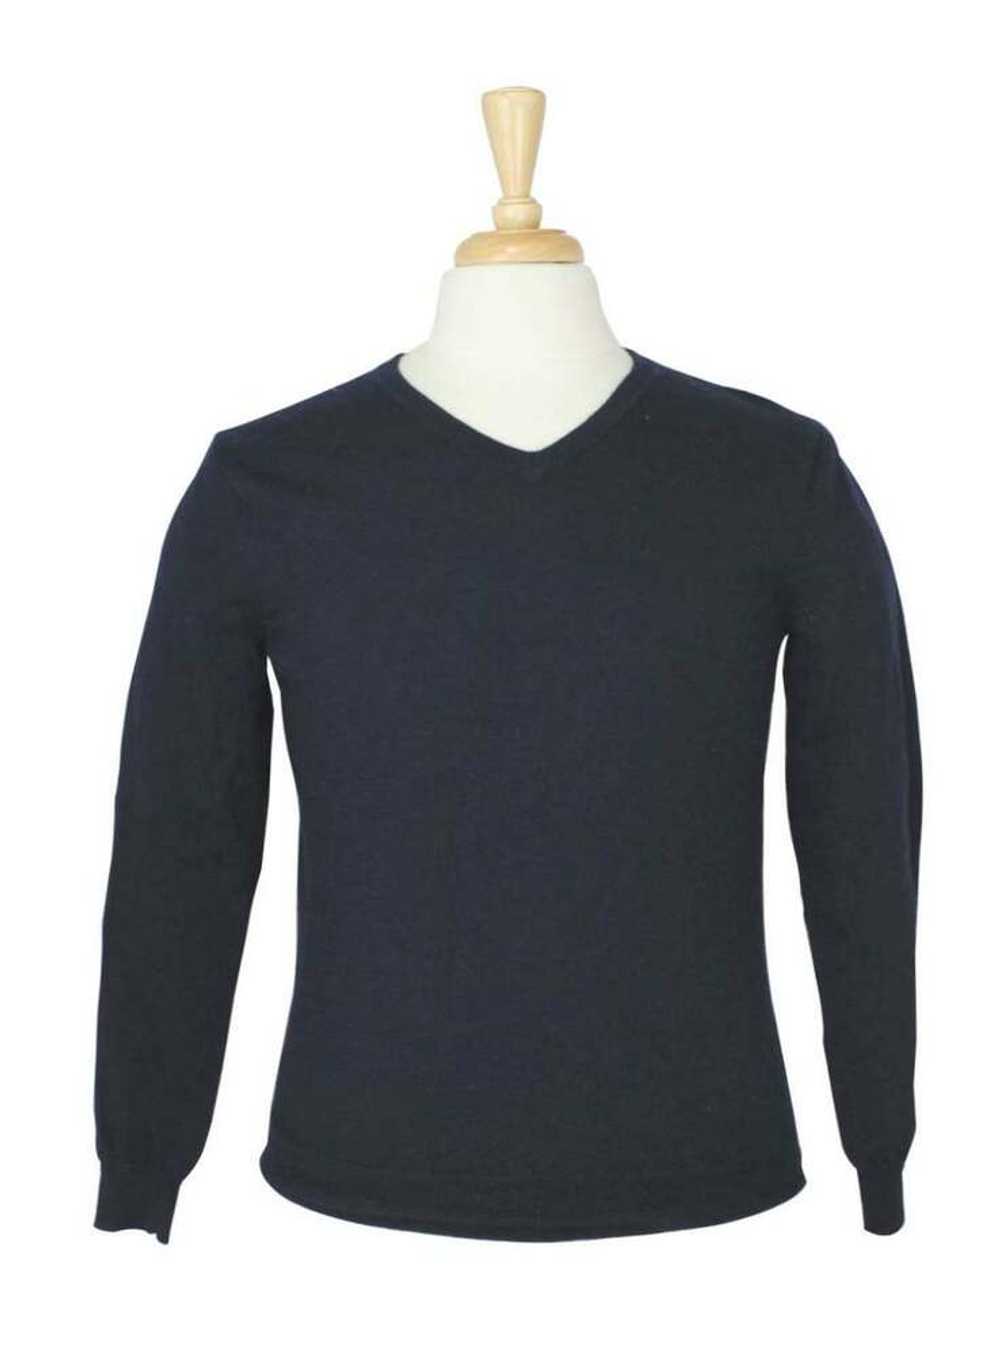 J. Crew Navy Blue V Neck Wool Sweater - image 1